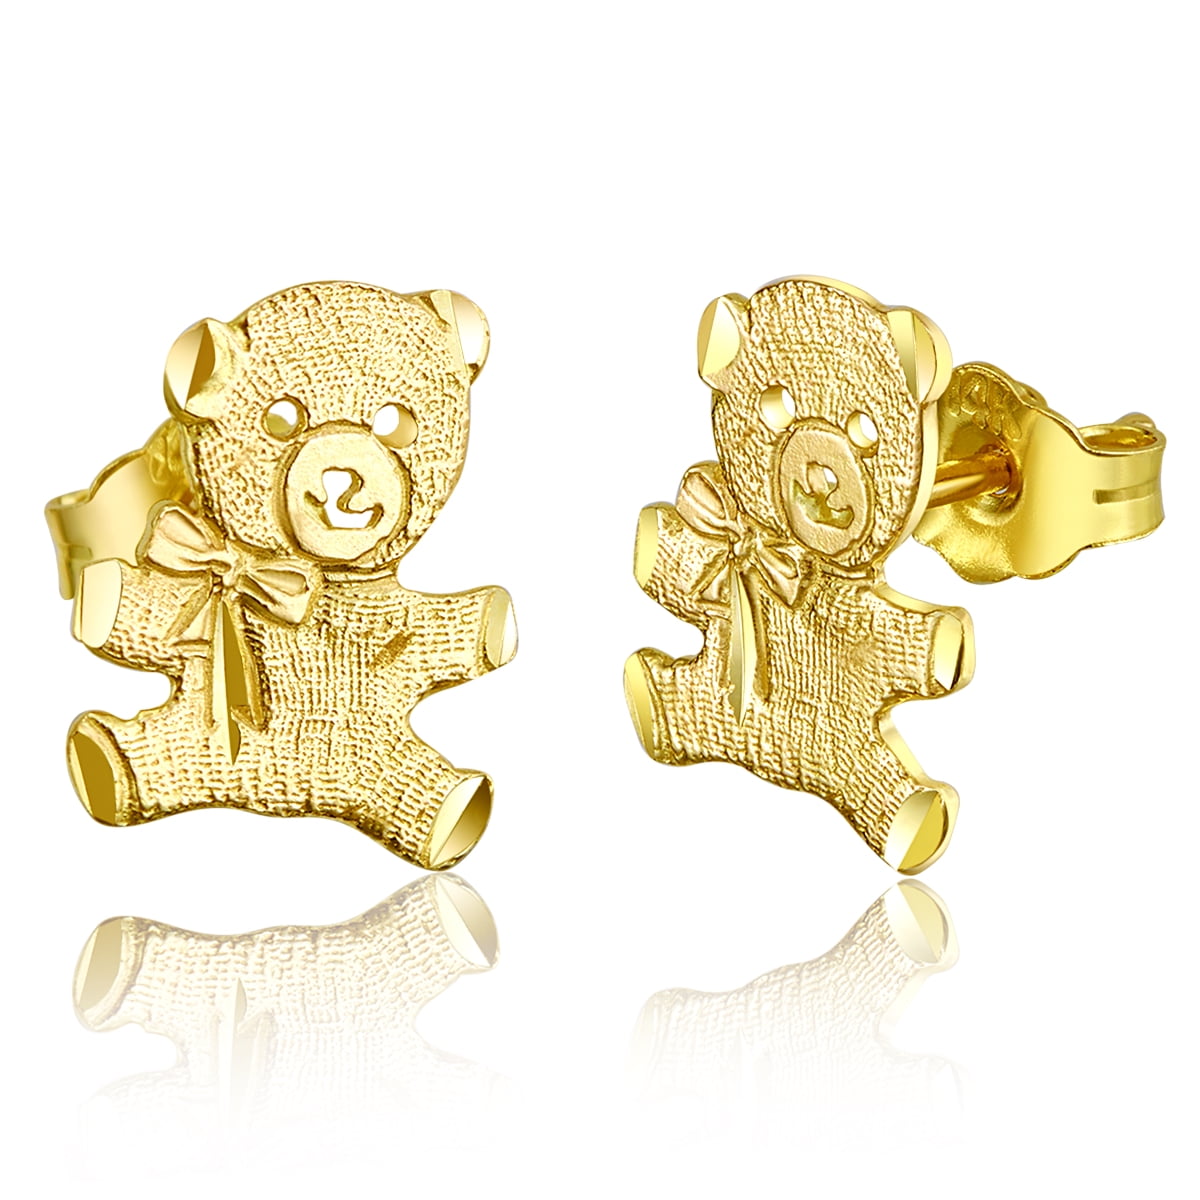 Wellingsale 14K Yellow Gold Polished Dancing Bear Stud Earrings With Screw Back